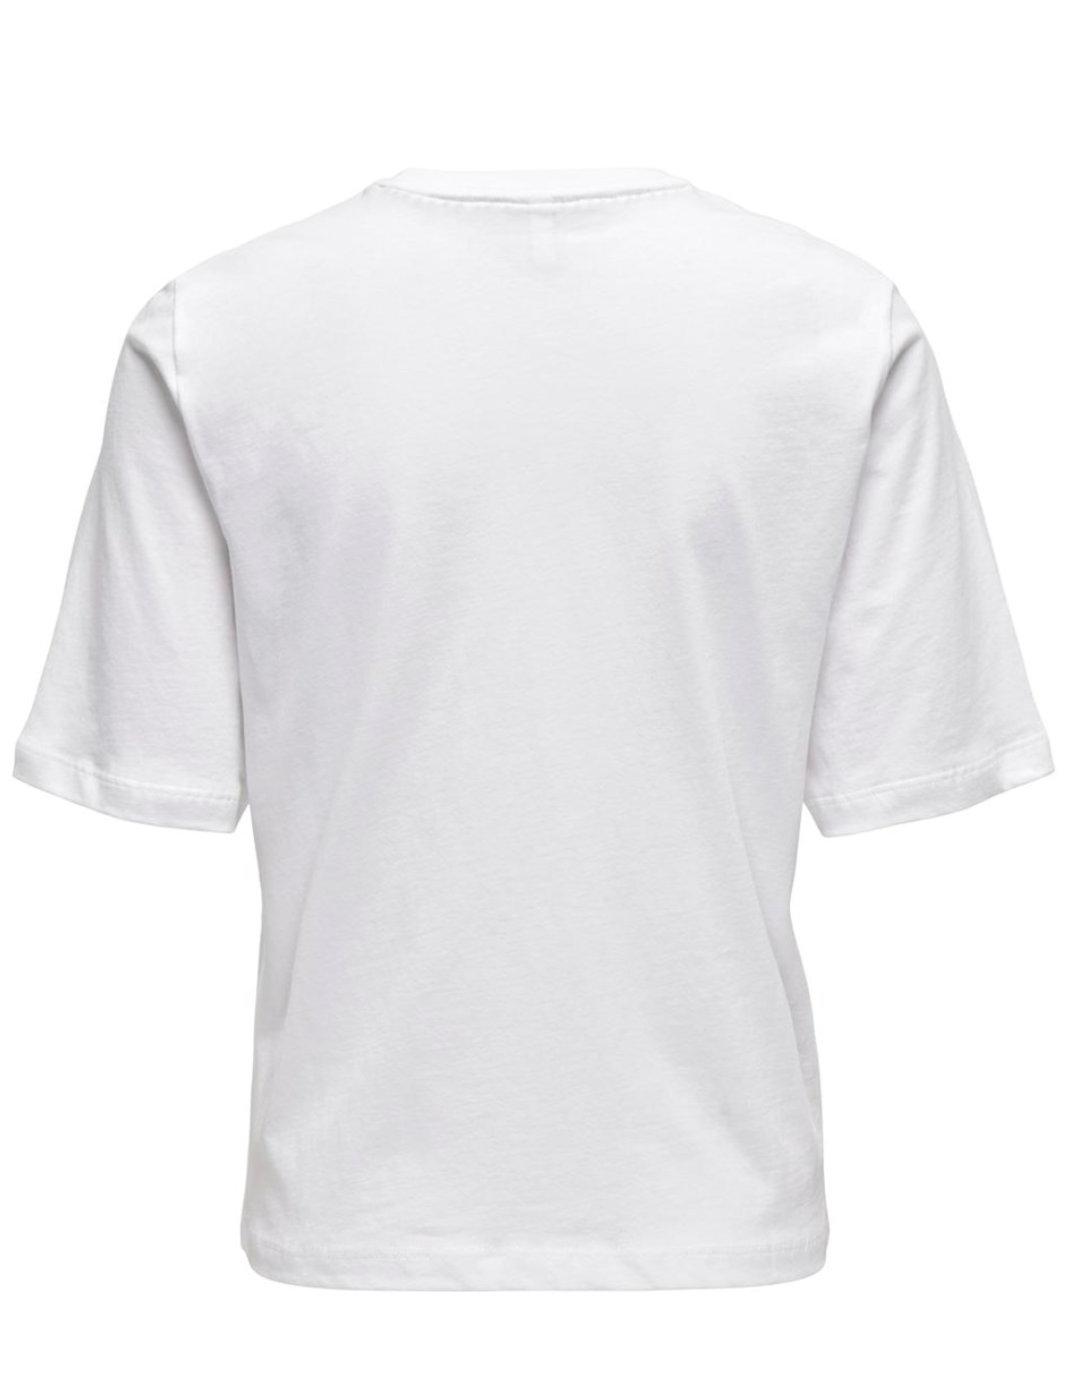 Camiseta Only Dorte blanca animal manga corta para mujer